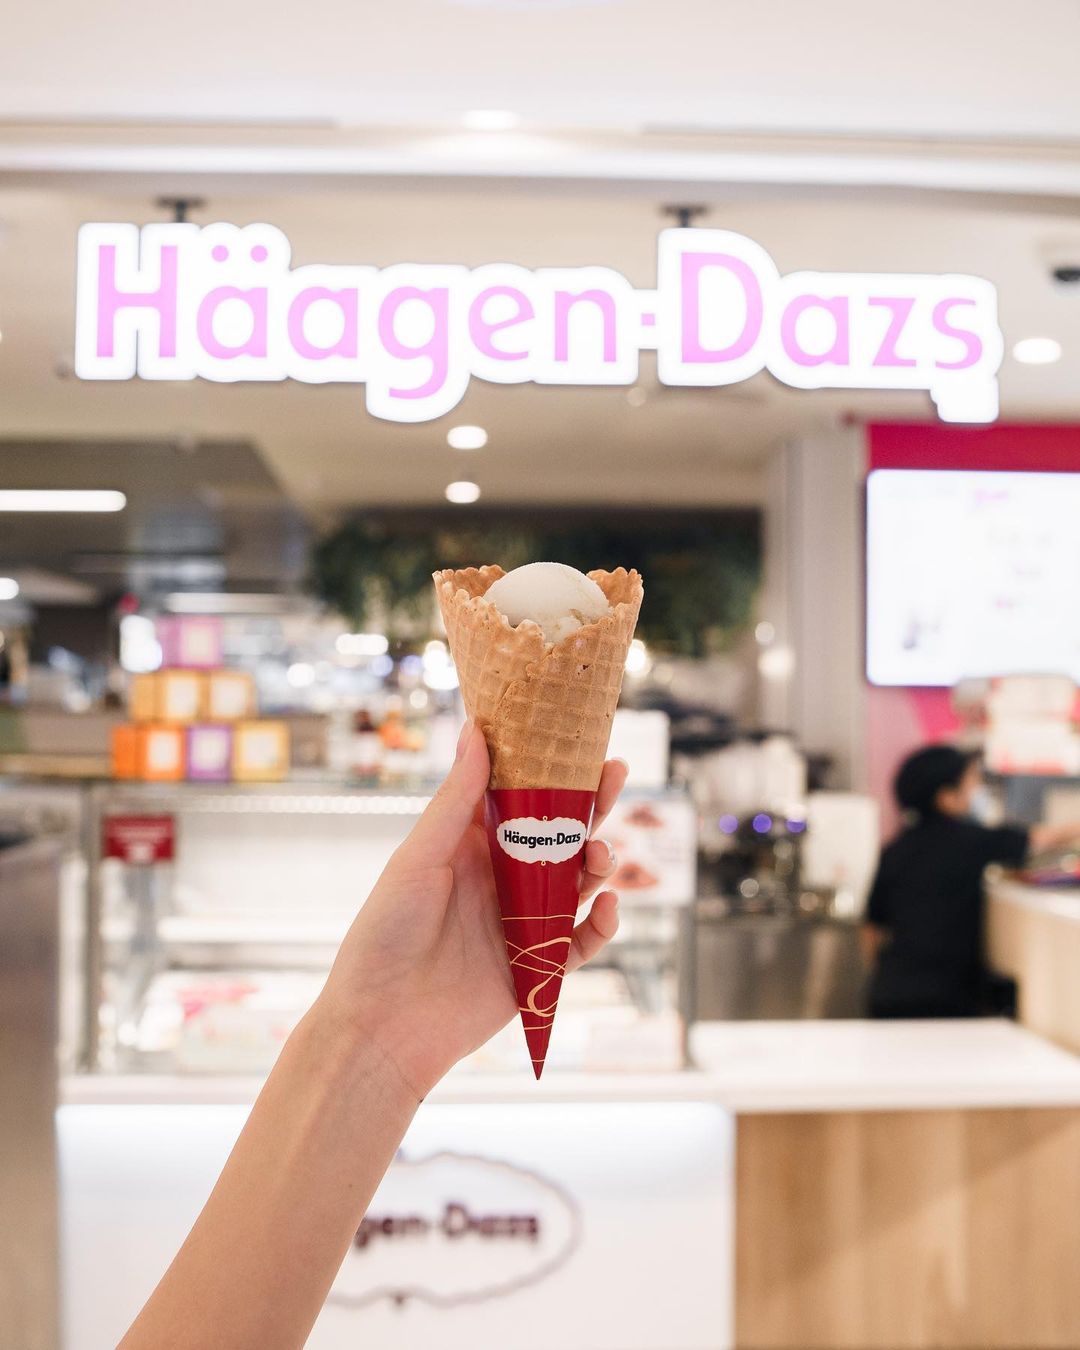 singapore deals - Häagen-Dazs